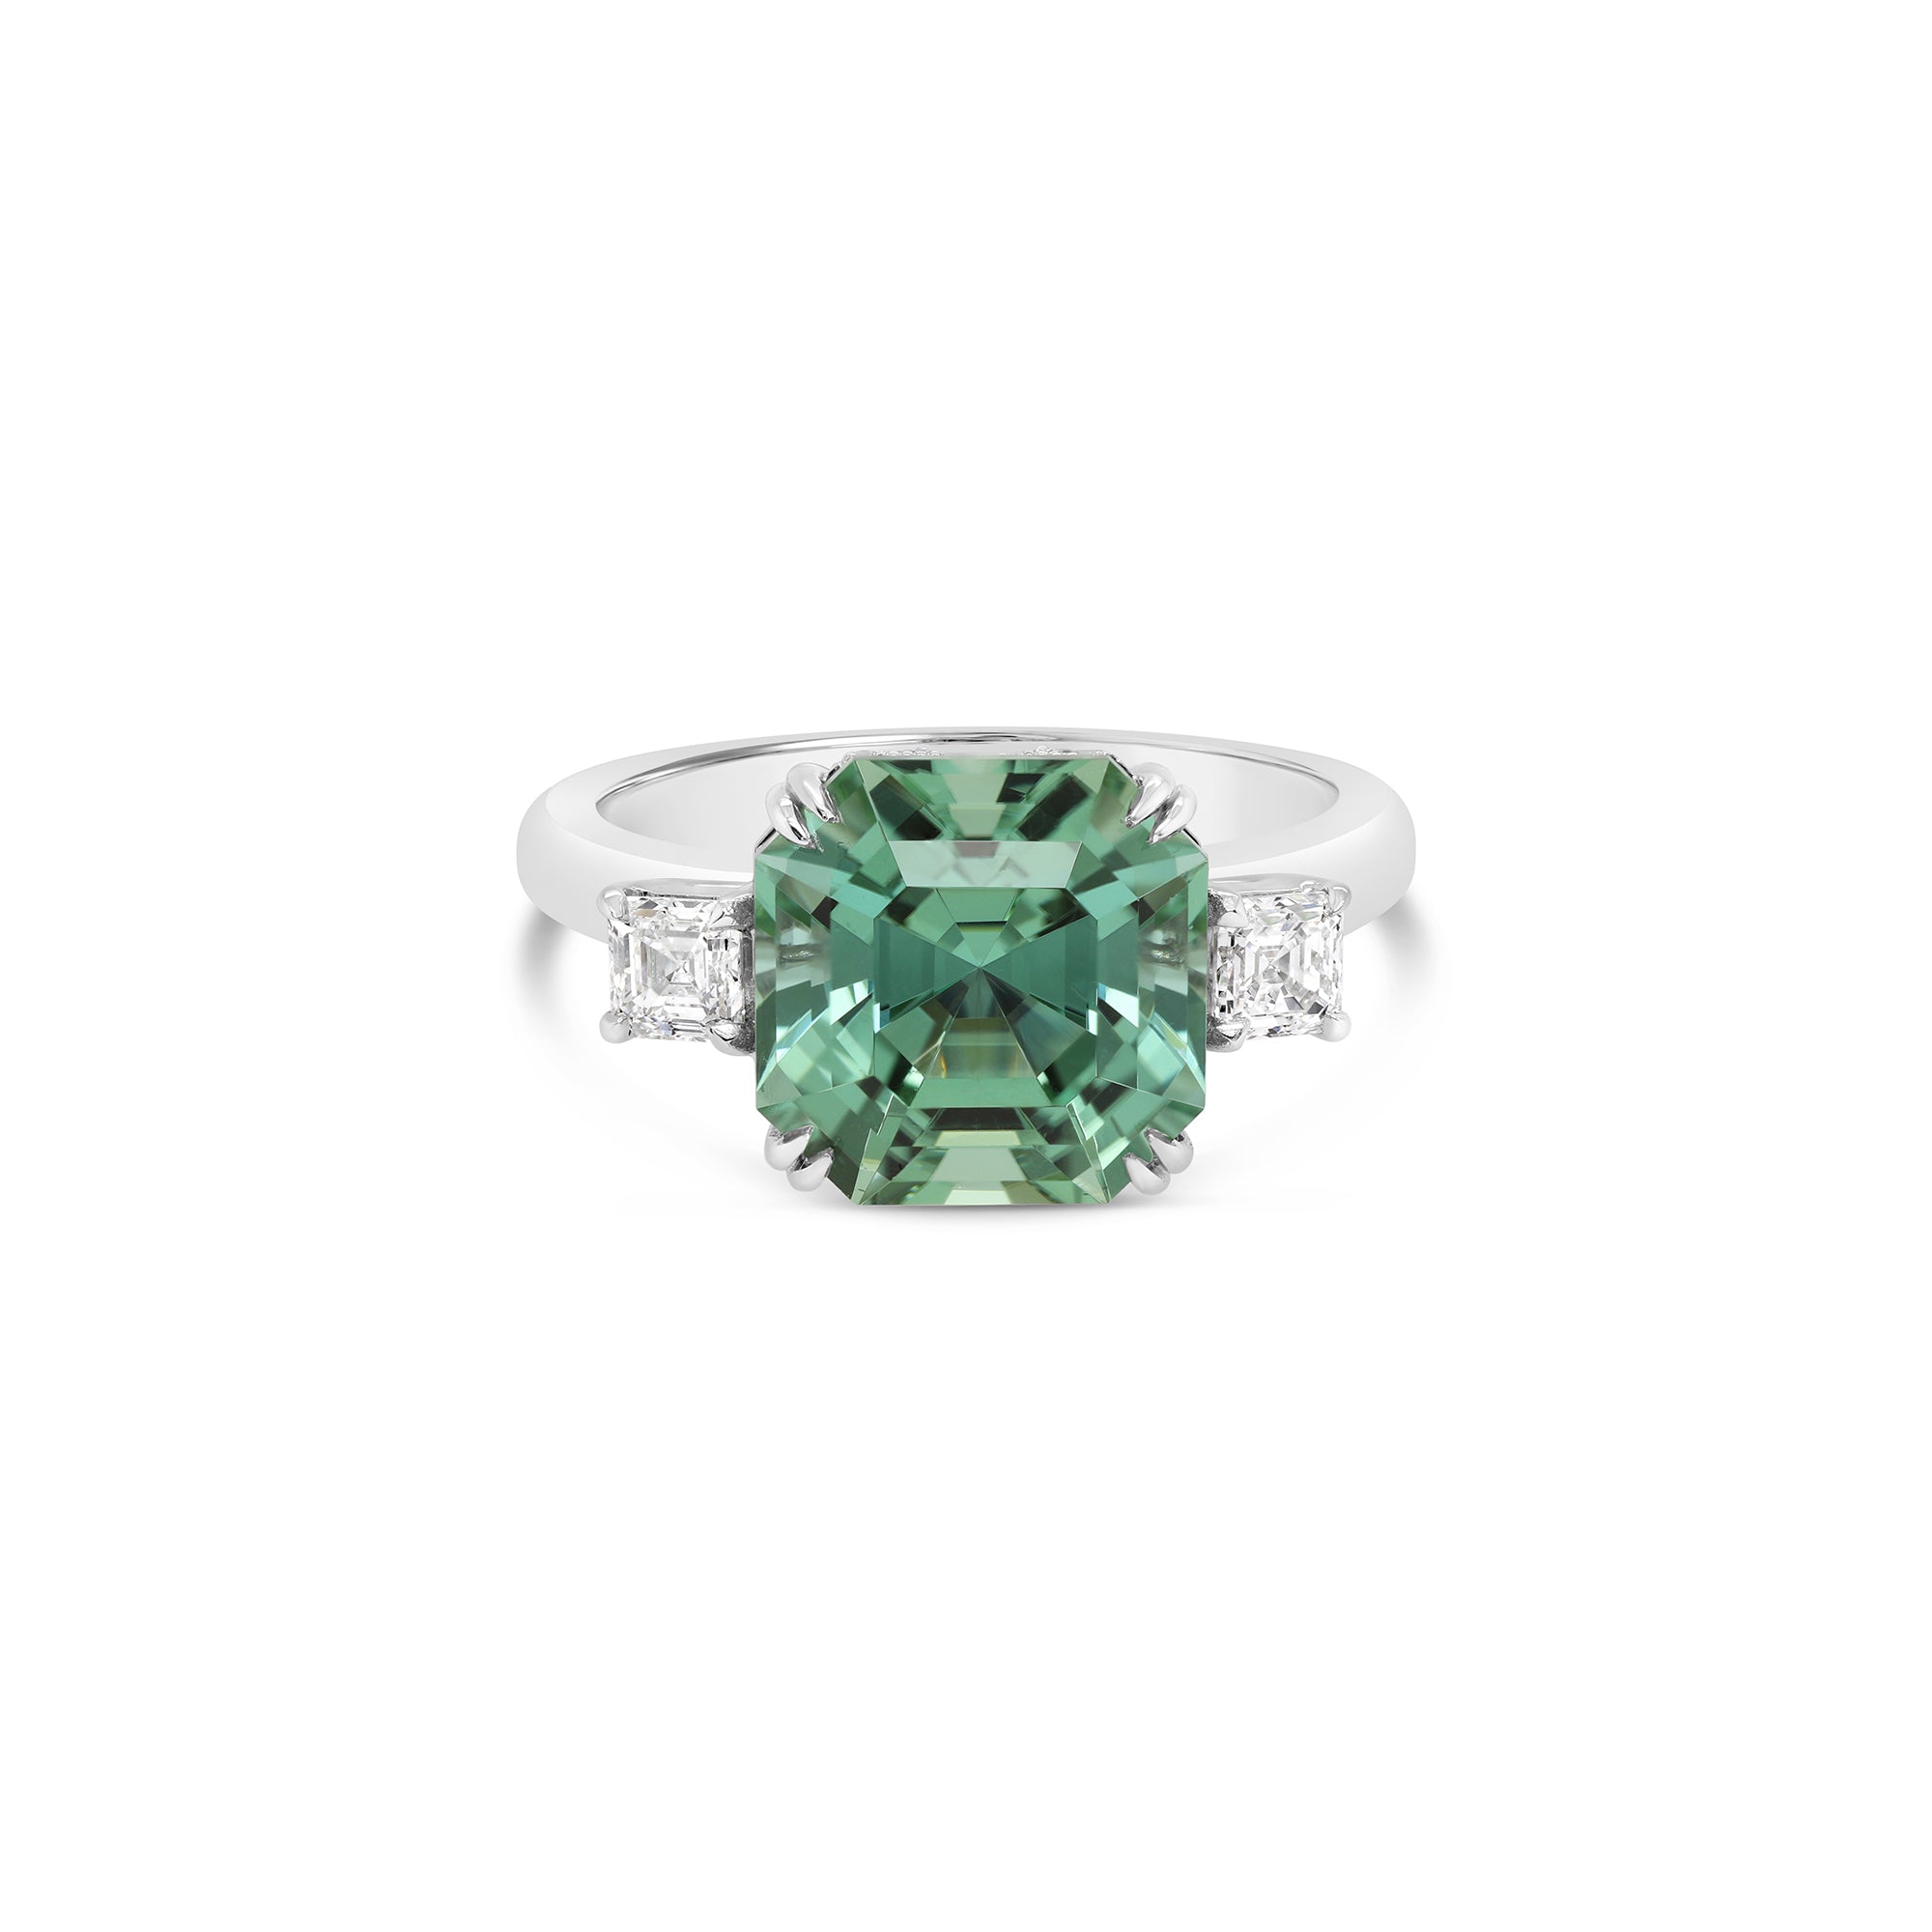 Green Mint Tourmaline & Diamond Cocktail Ring